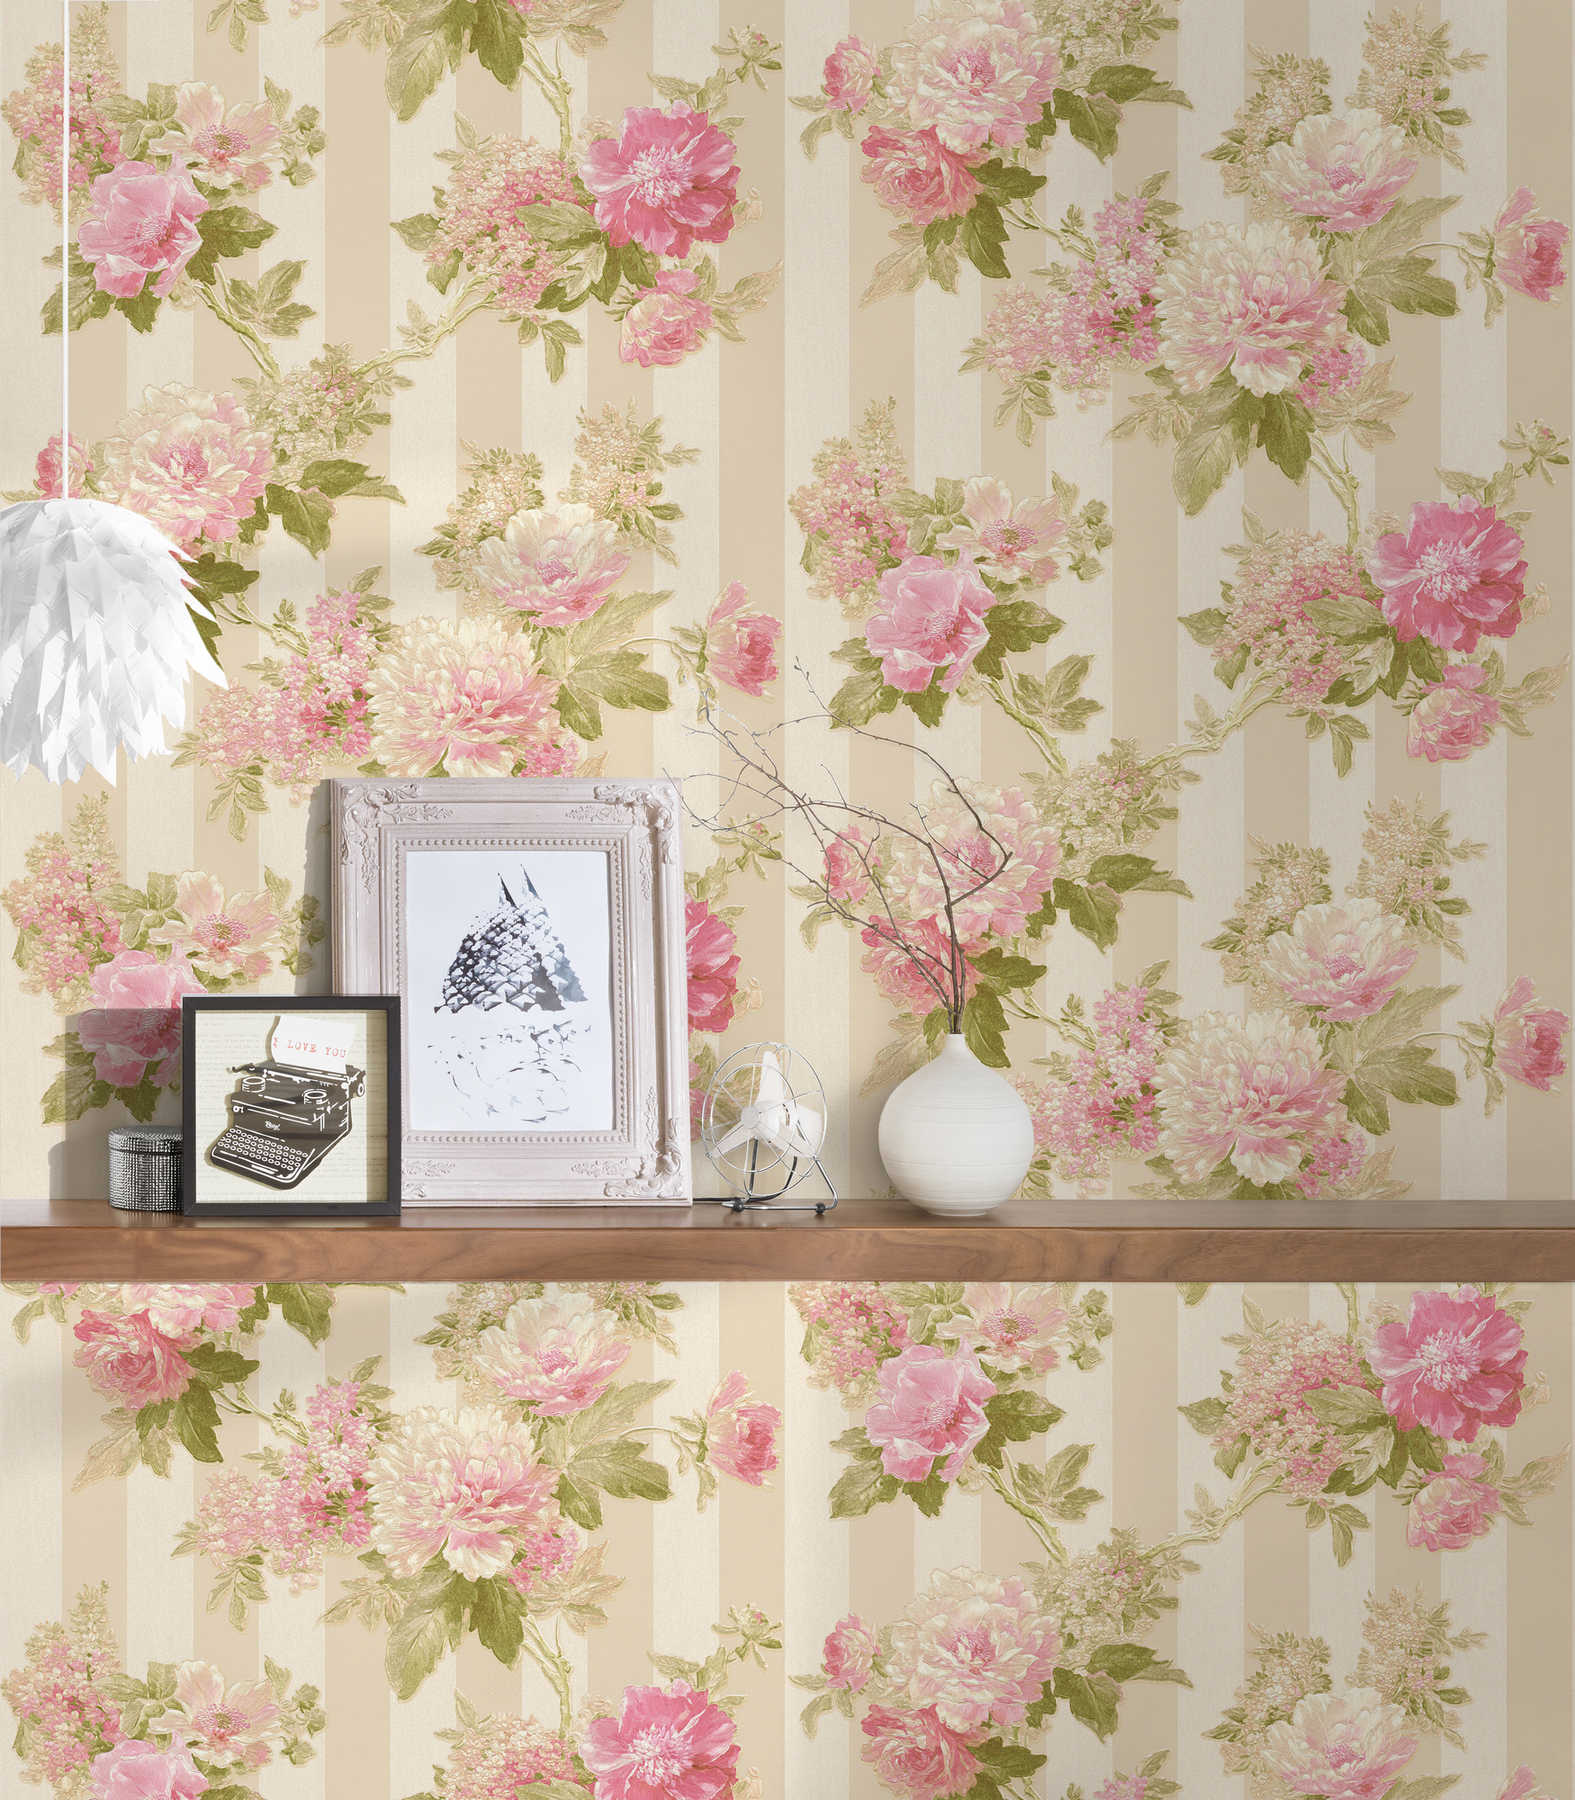             Wallpaper floral motif and stripe design - pink, green, cream
        